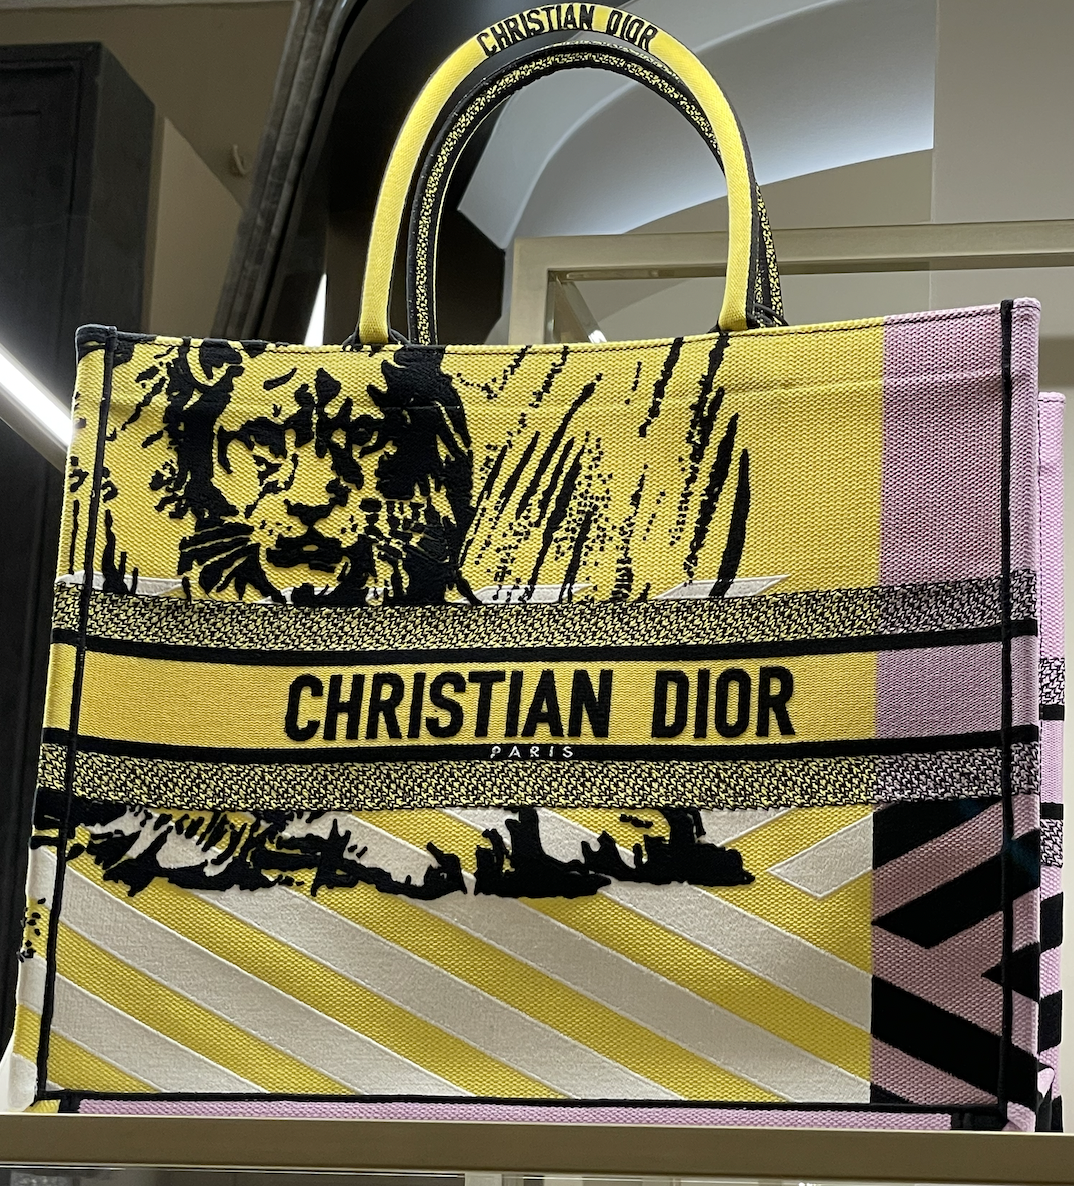 Chirstian Dior